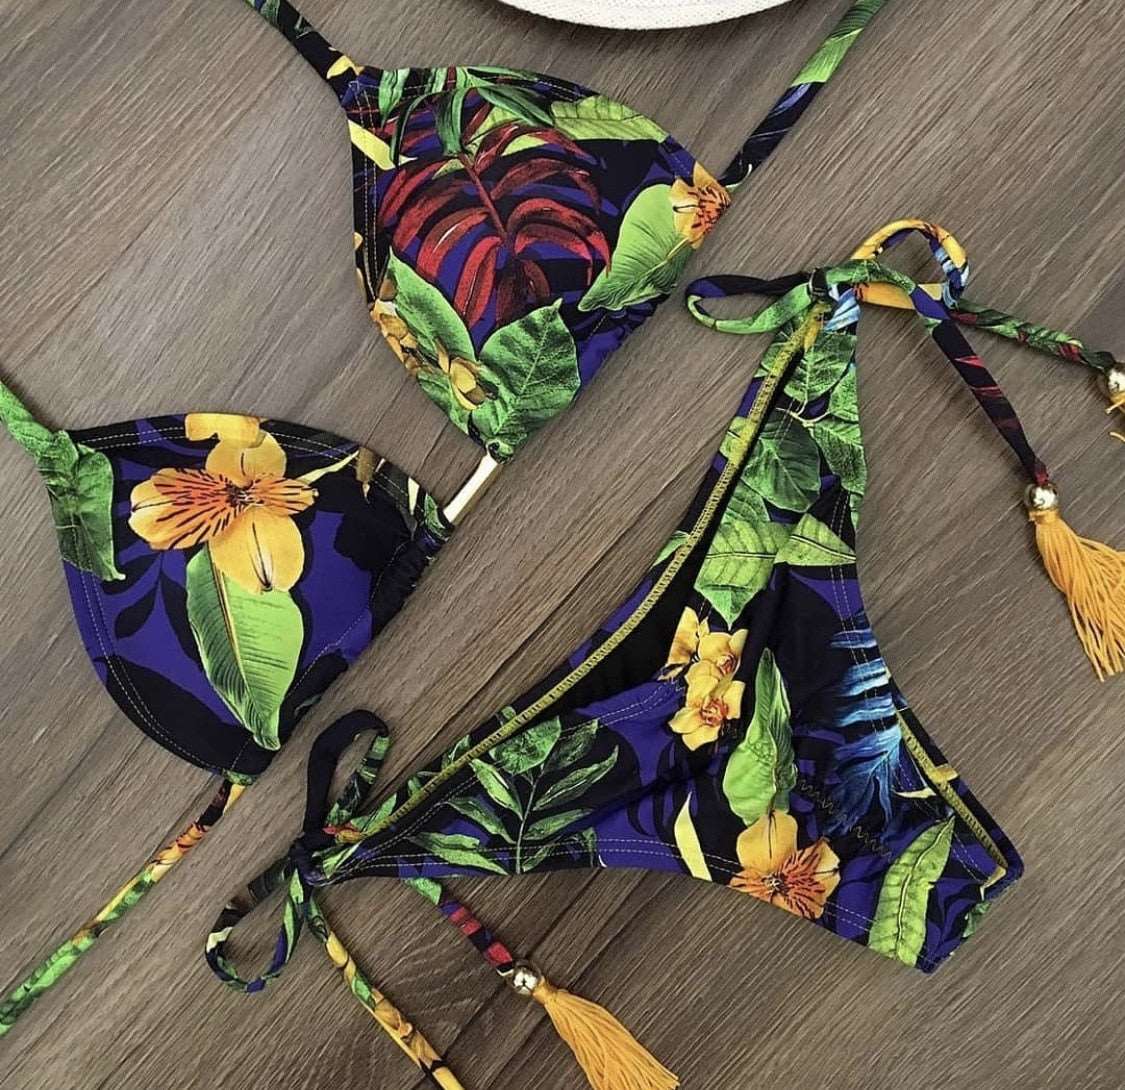 2023 Girls Ties Halter Brazilian Push Up Bikini Tassels Biquini Swimwear Strappy Bandage Swimsuit Beach Wear Bathing Suit Women S~XL MK04